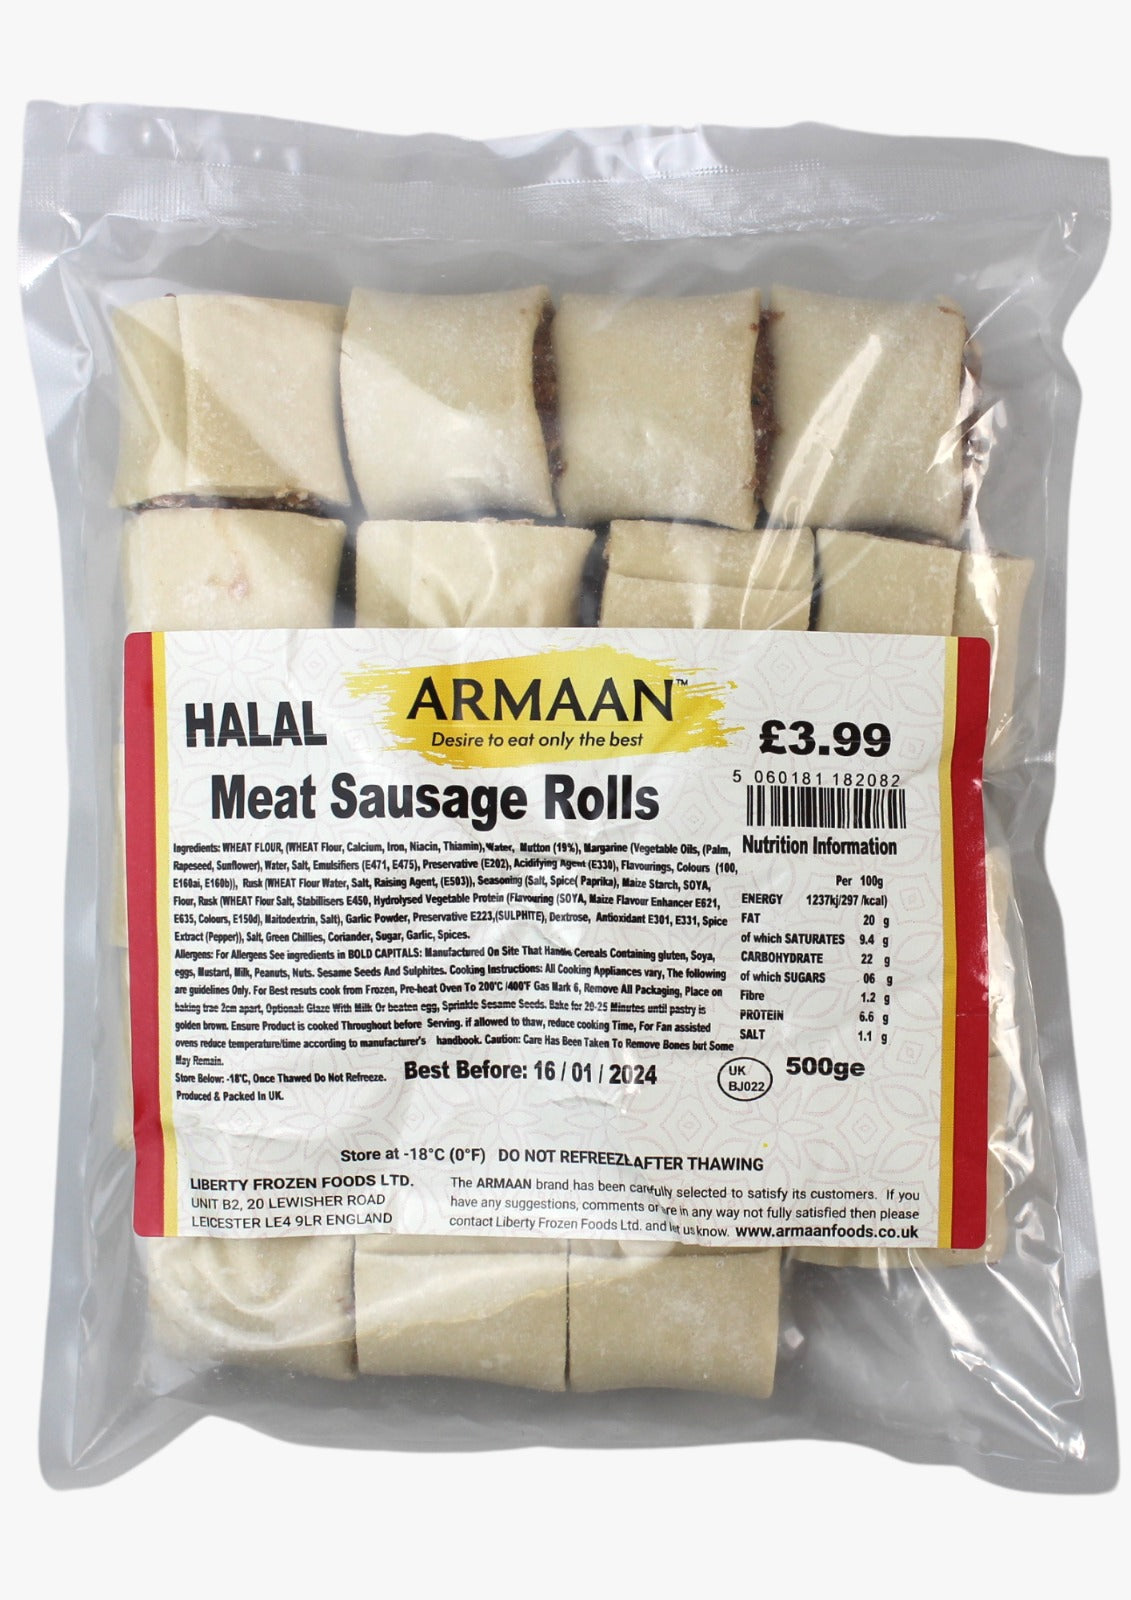 Armaan - Meat Sausage Rolls (480g)